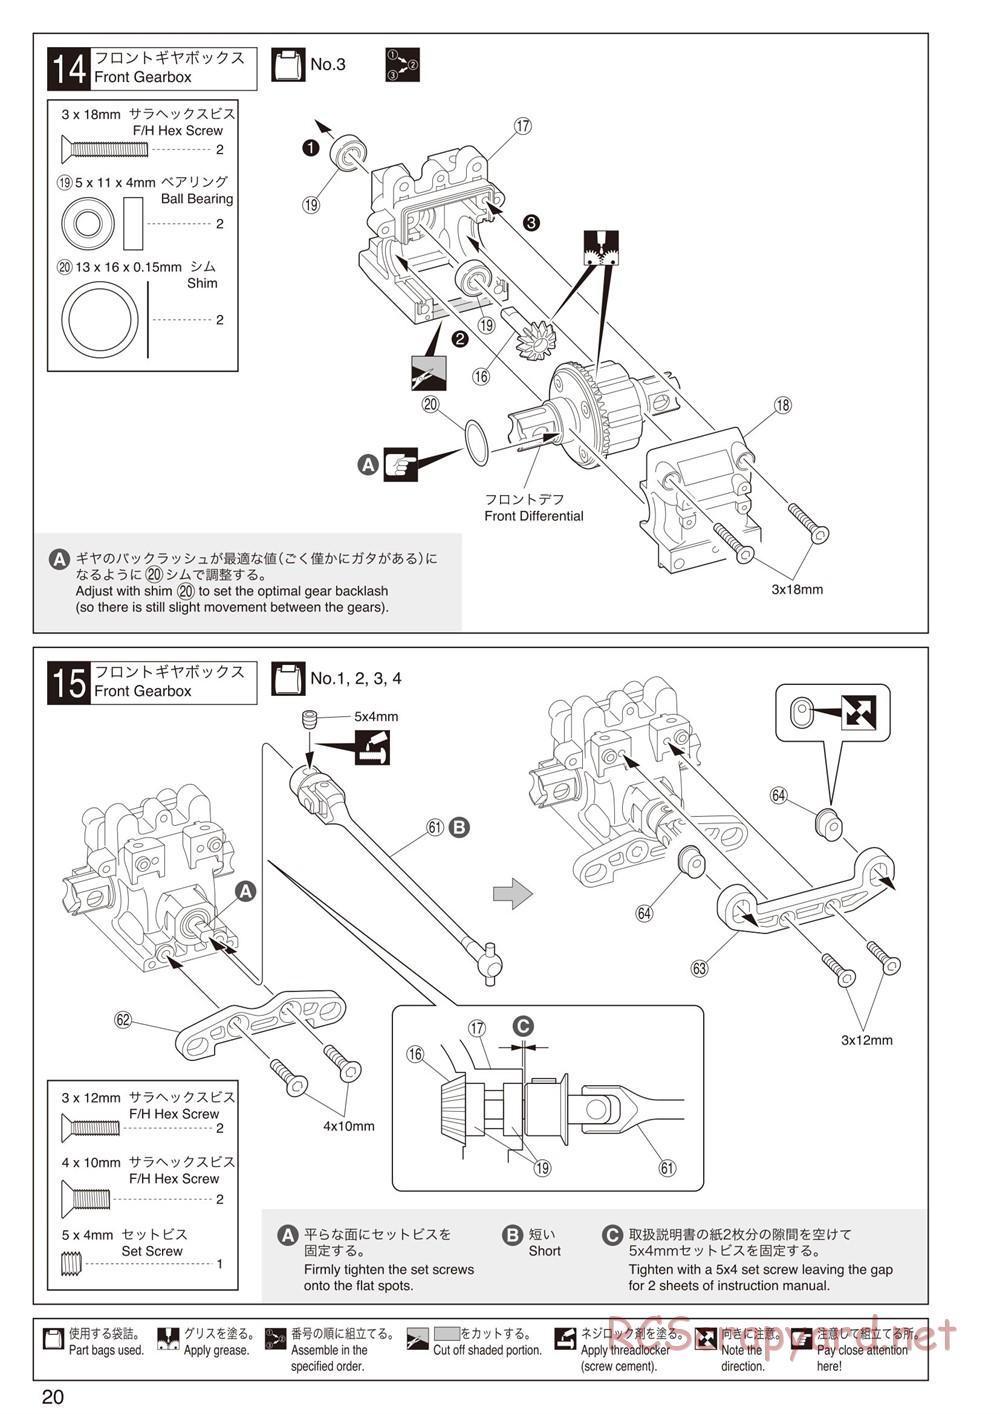 Kyosho - Inferno MP9 TKI2 - Manual - Page 20